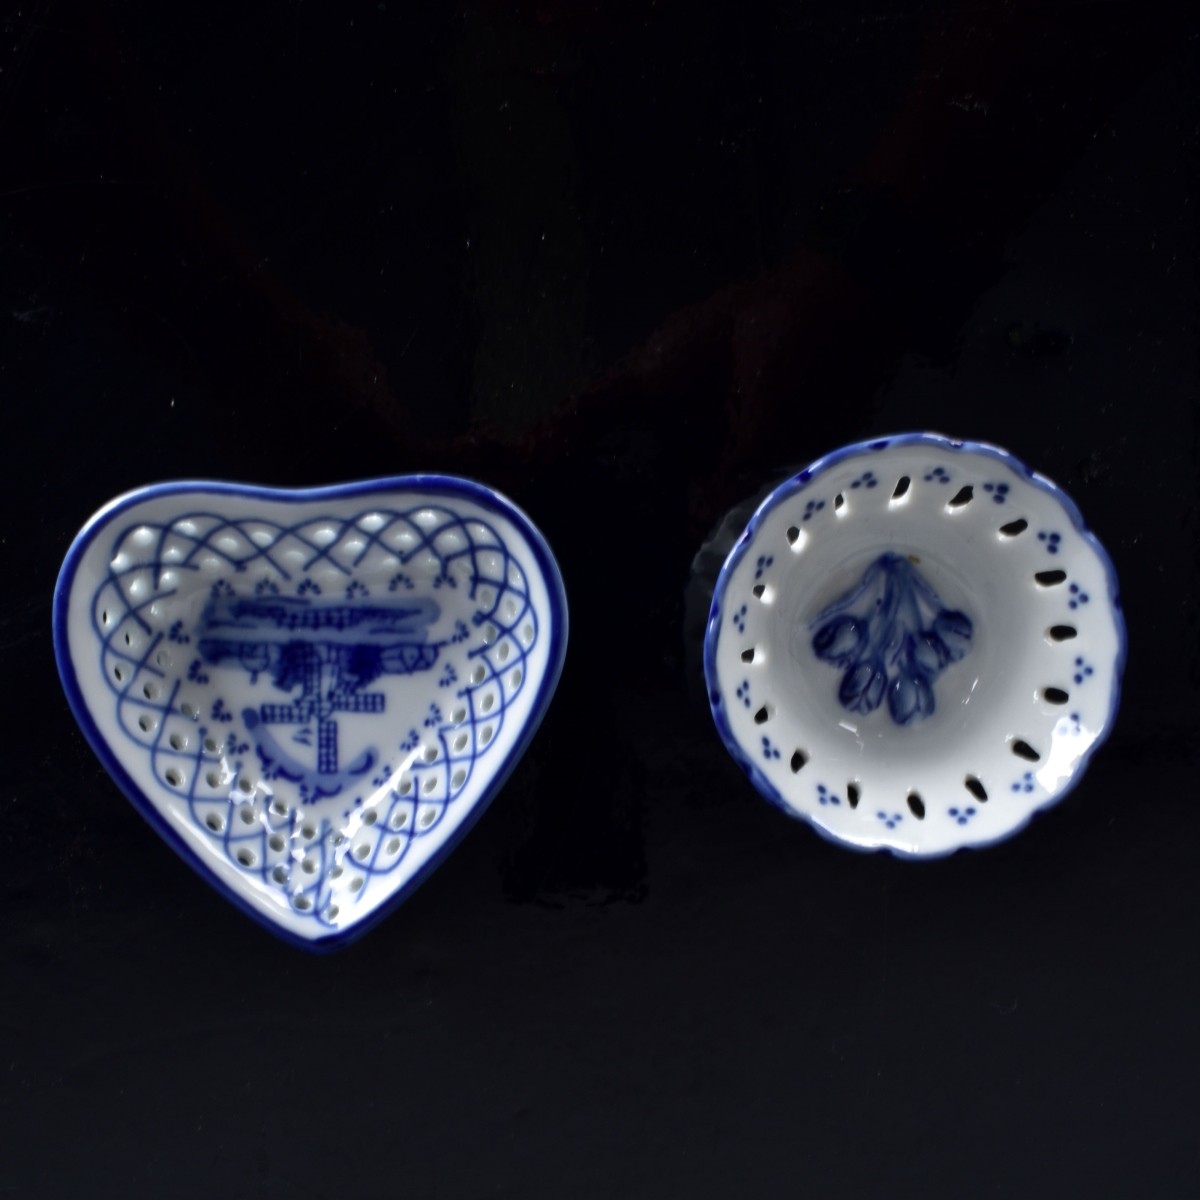 Seven Delft Porcelain Tableware